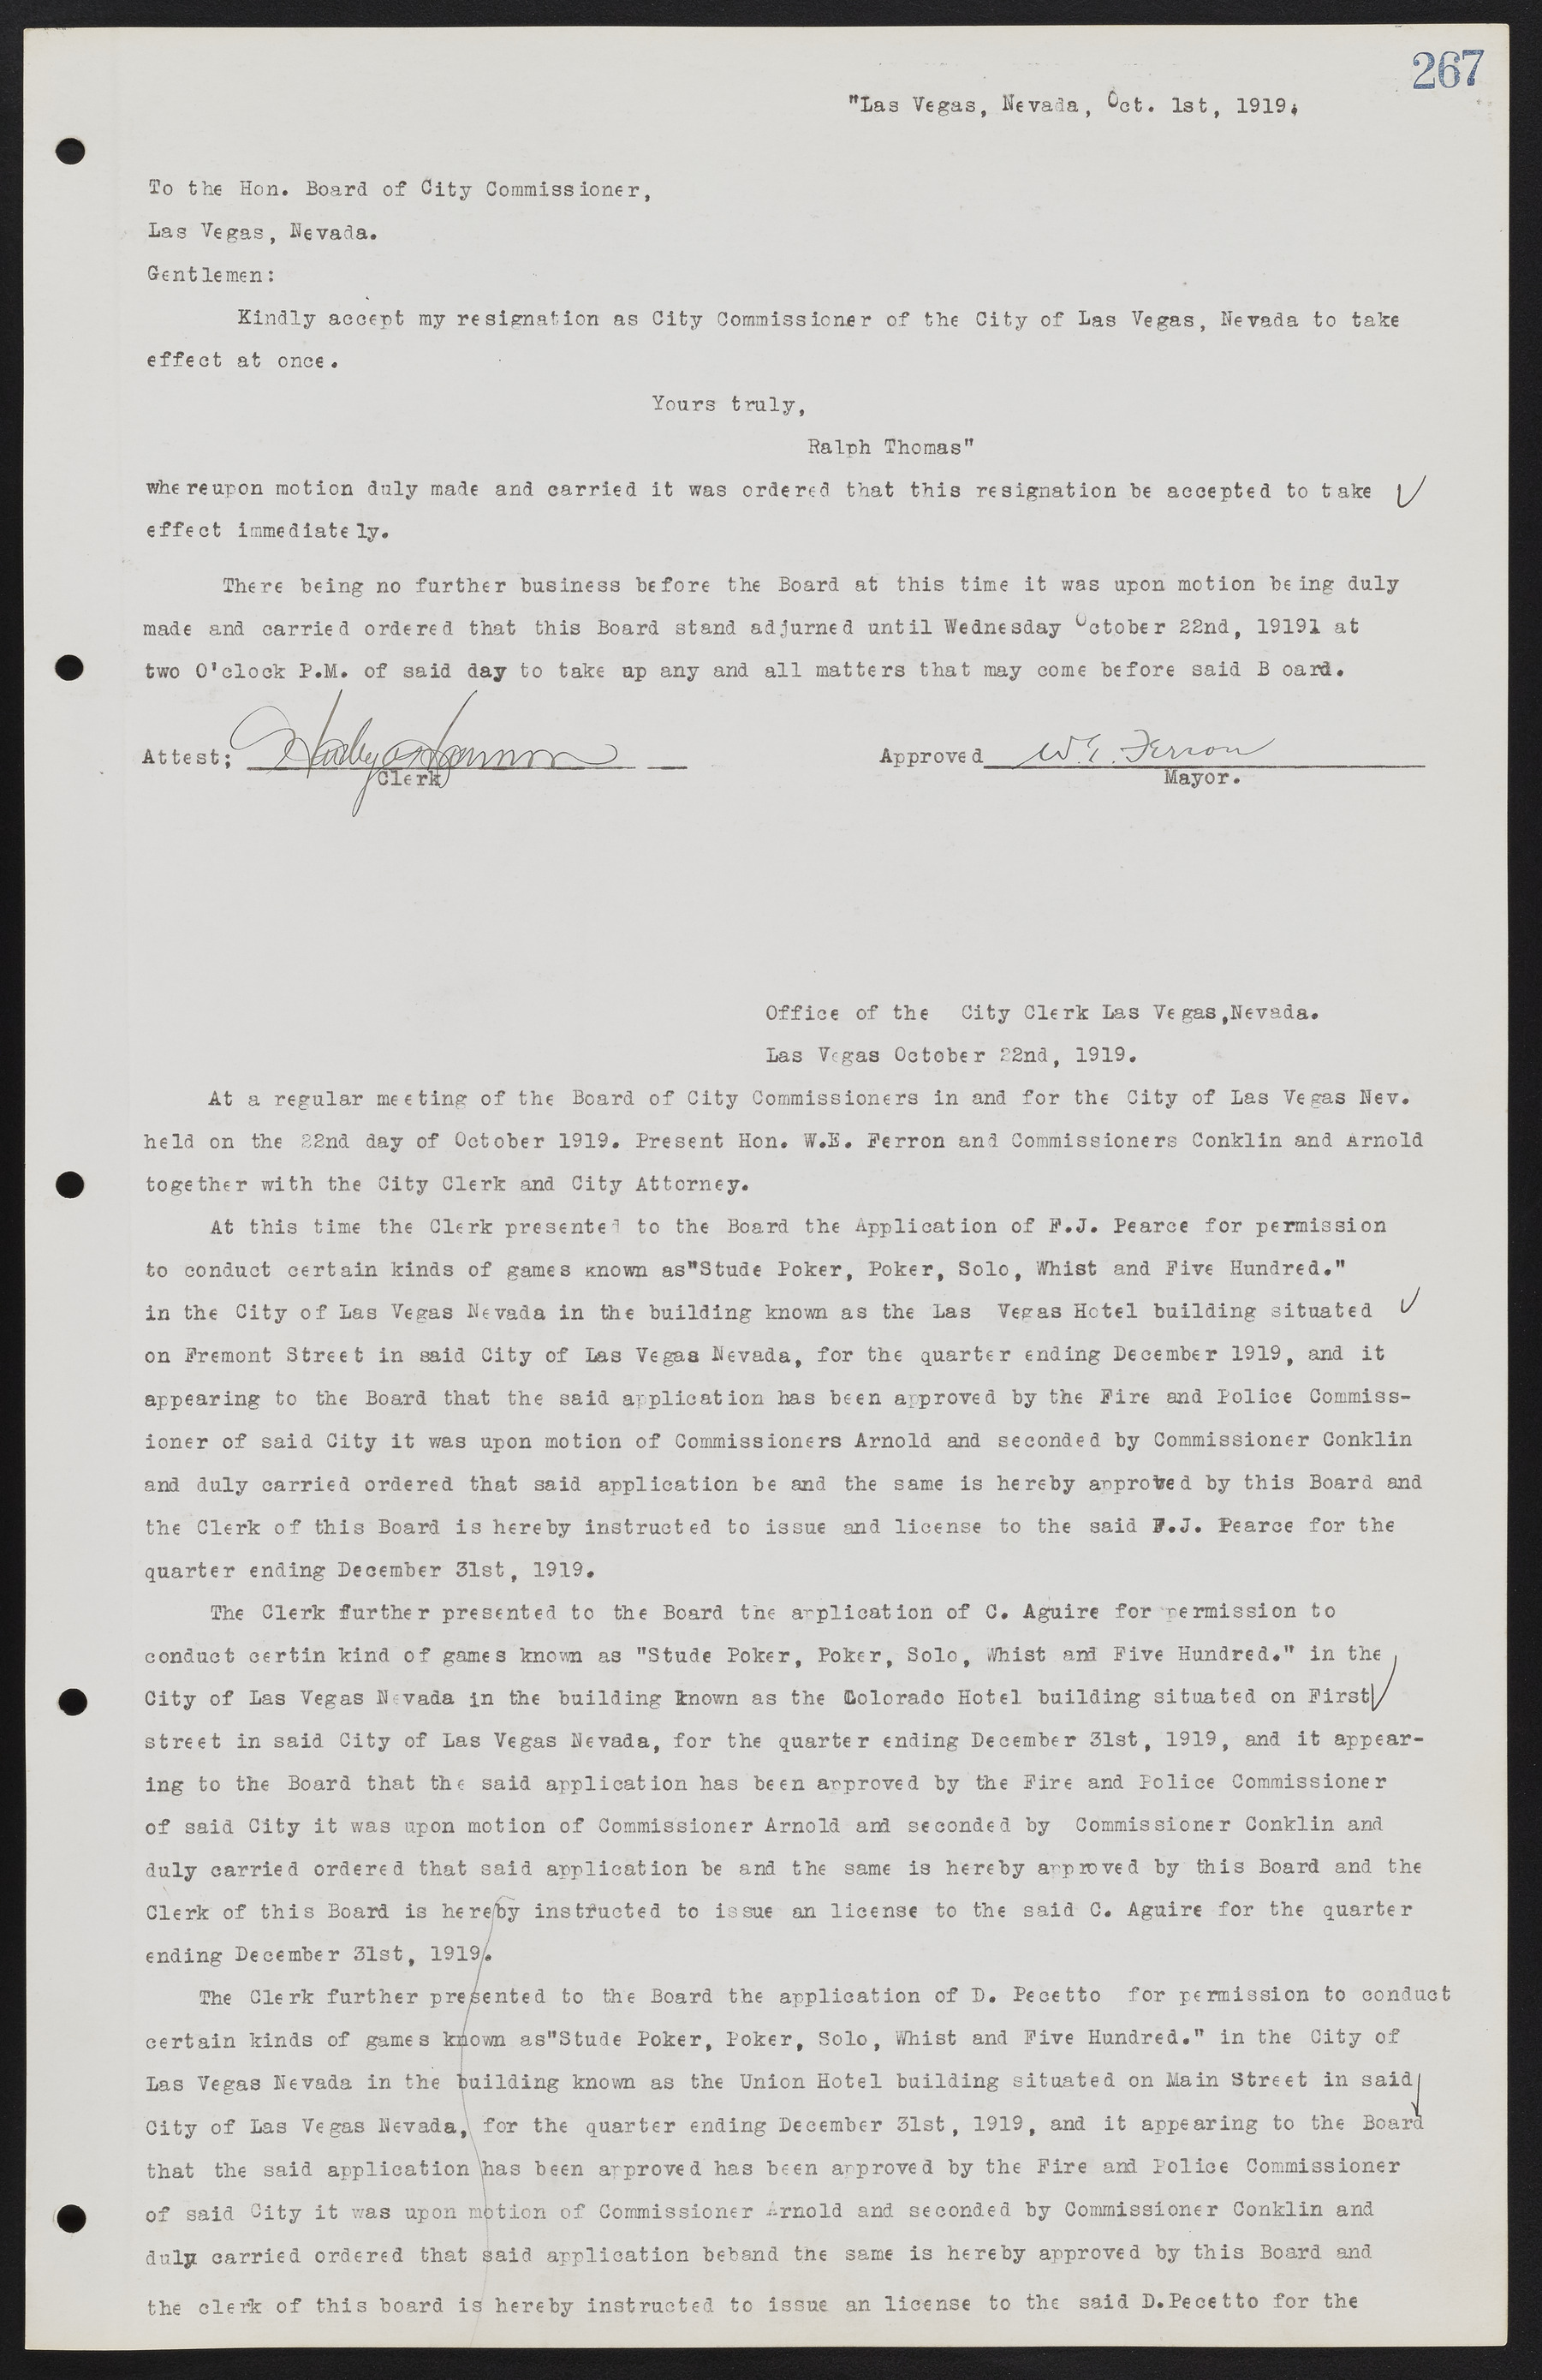 Las Vegas City Commission Minutes, June 22, 1911 to February 7, 1922, lvc000001-283